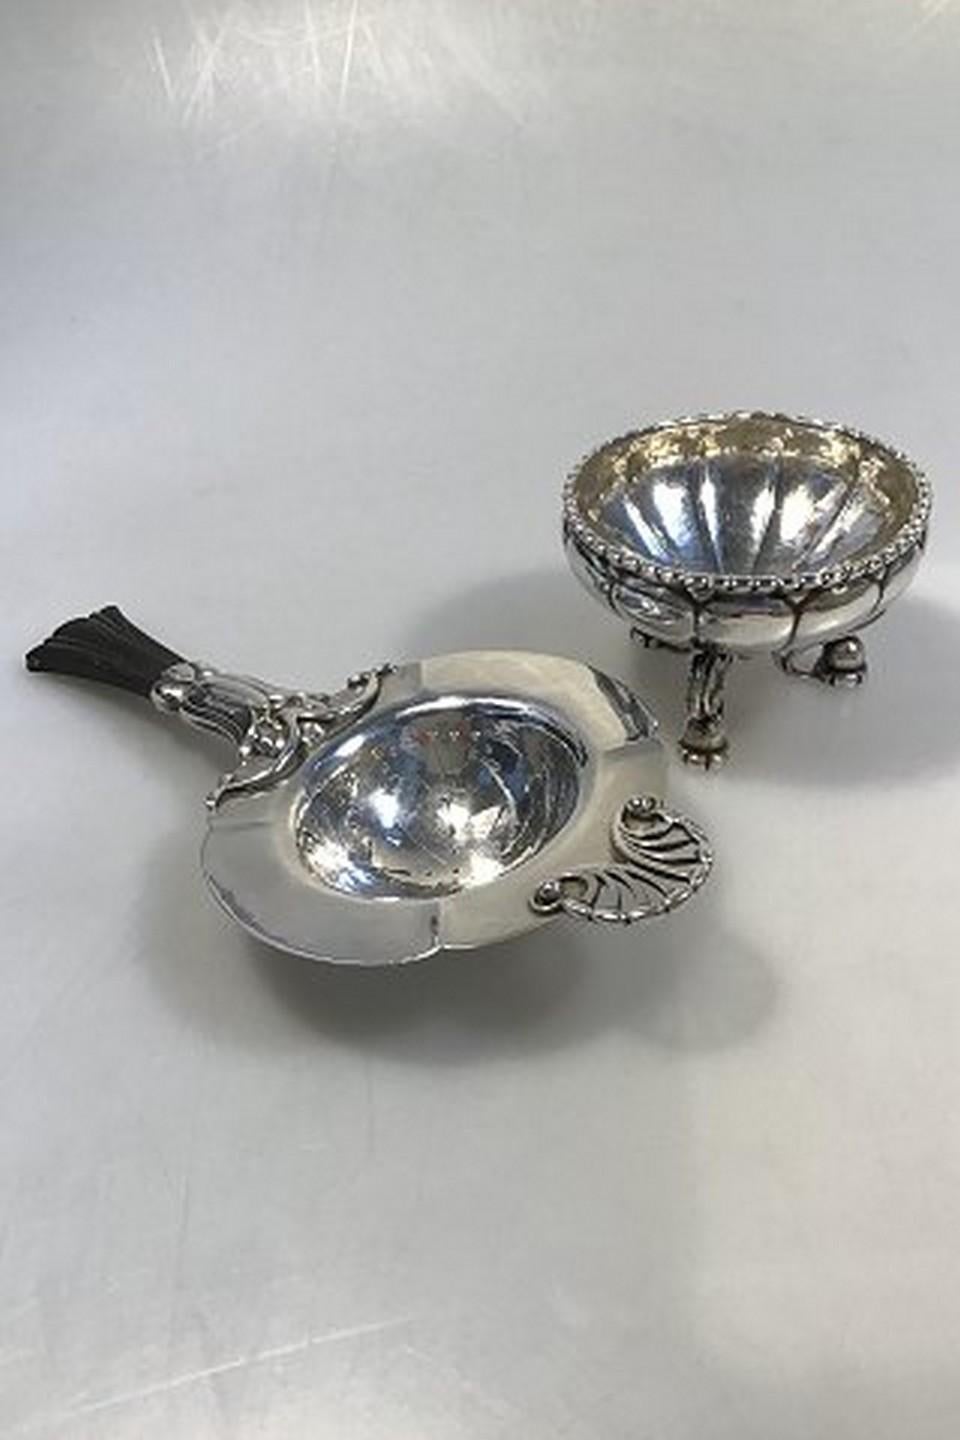 Georg Jensen sterling silver tea strainer and holder no. 97 measures: Holder diameter 7 cm (2 3/4 in), strainer L 18 cm (7 3/32in) combined weight 156 gr/5.51 oz
Item no.: 414541.